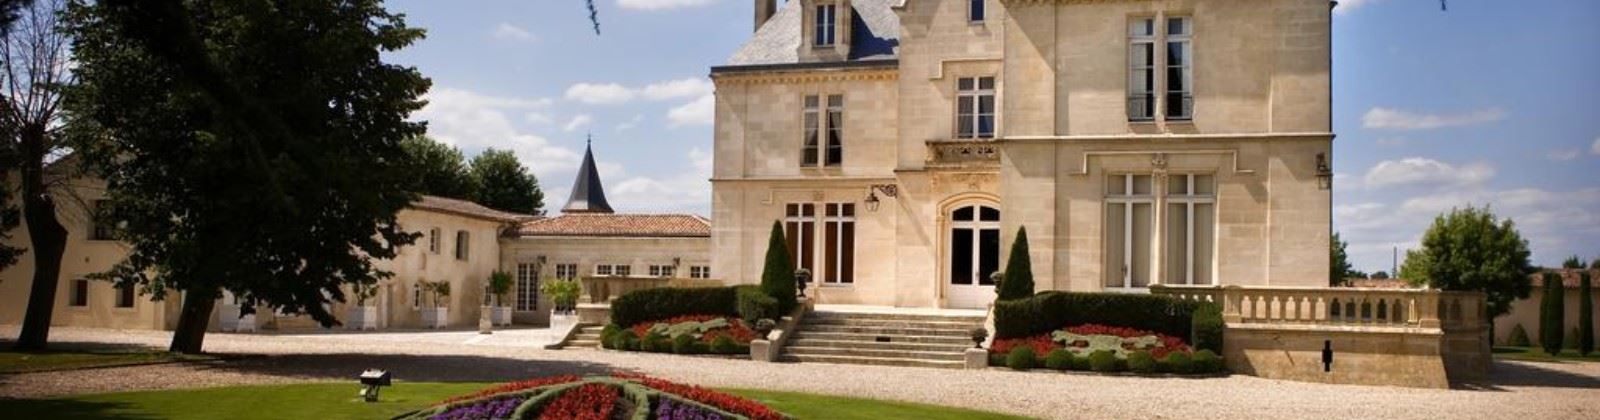 OLEVENE image - chateau-pape-clement-olevene-hotel-restaurant-reunion-booking-events-